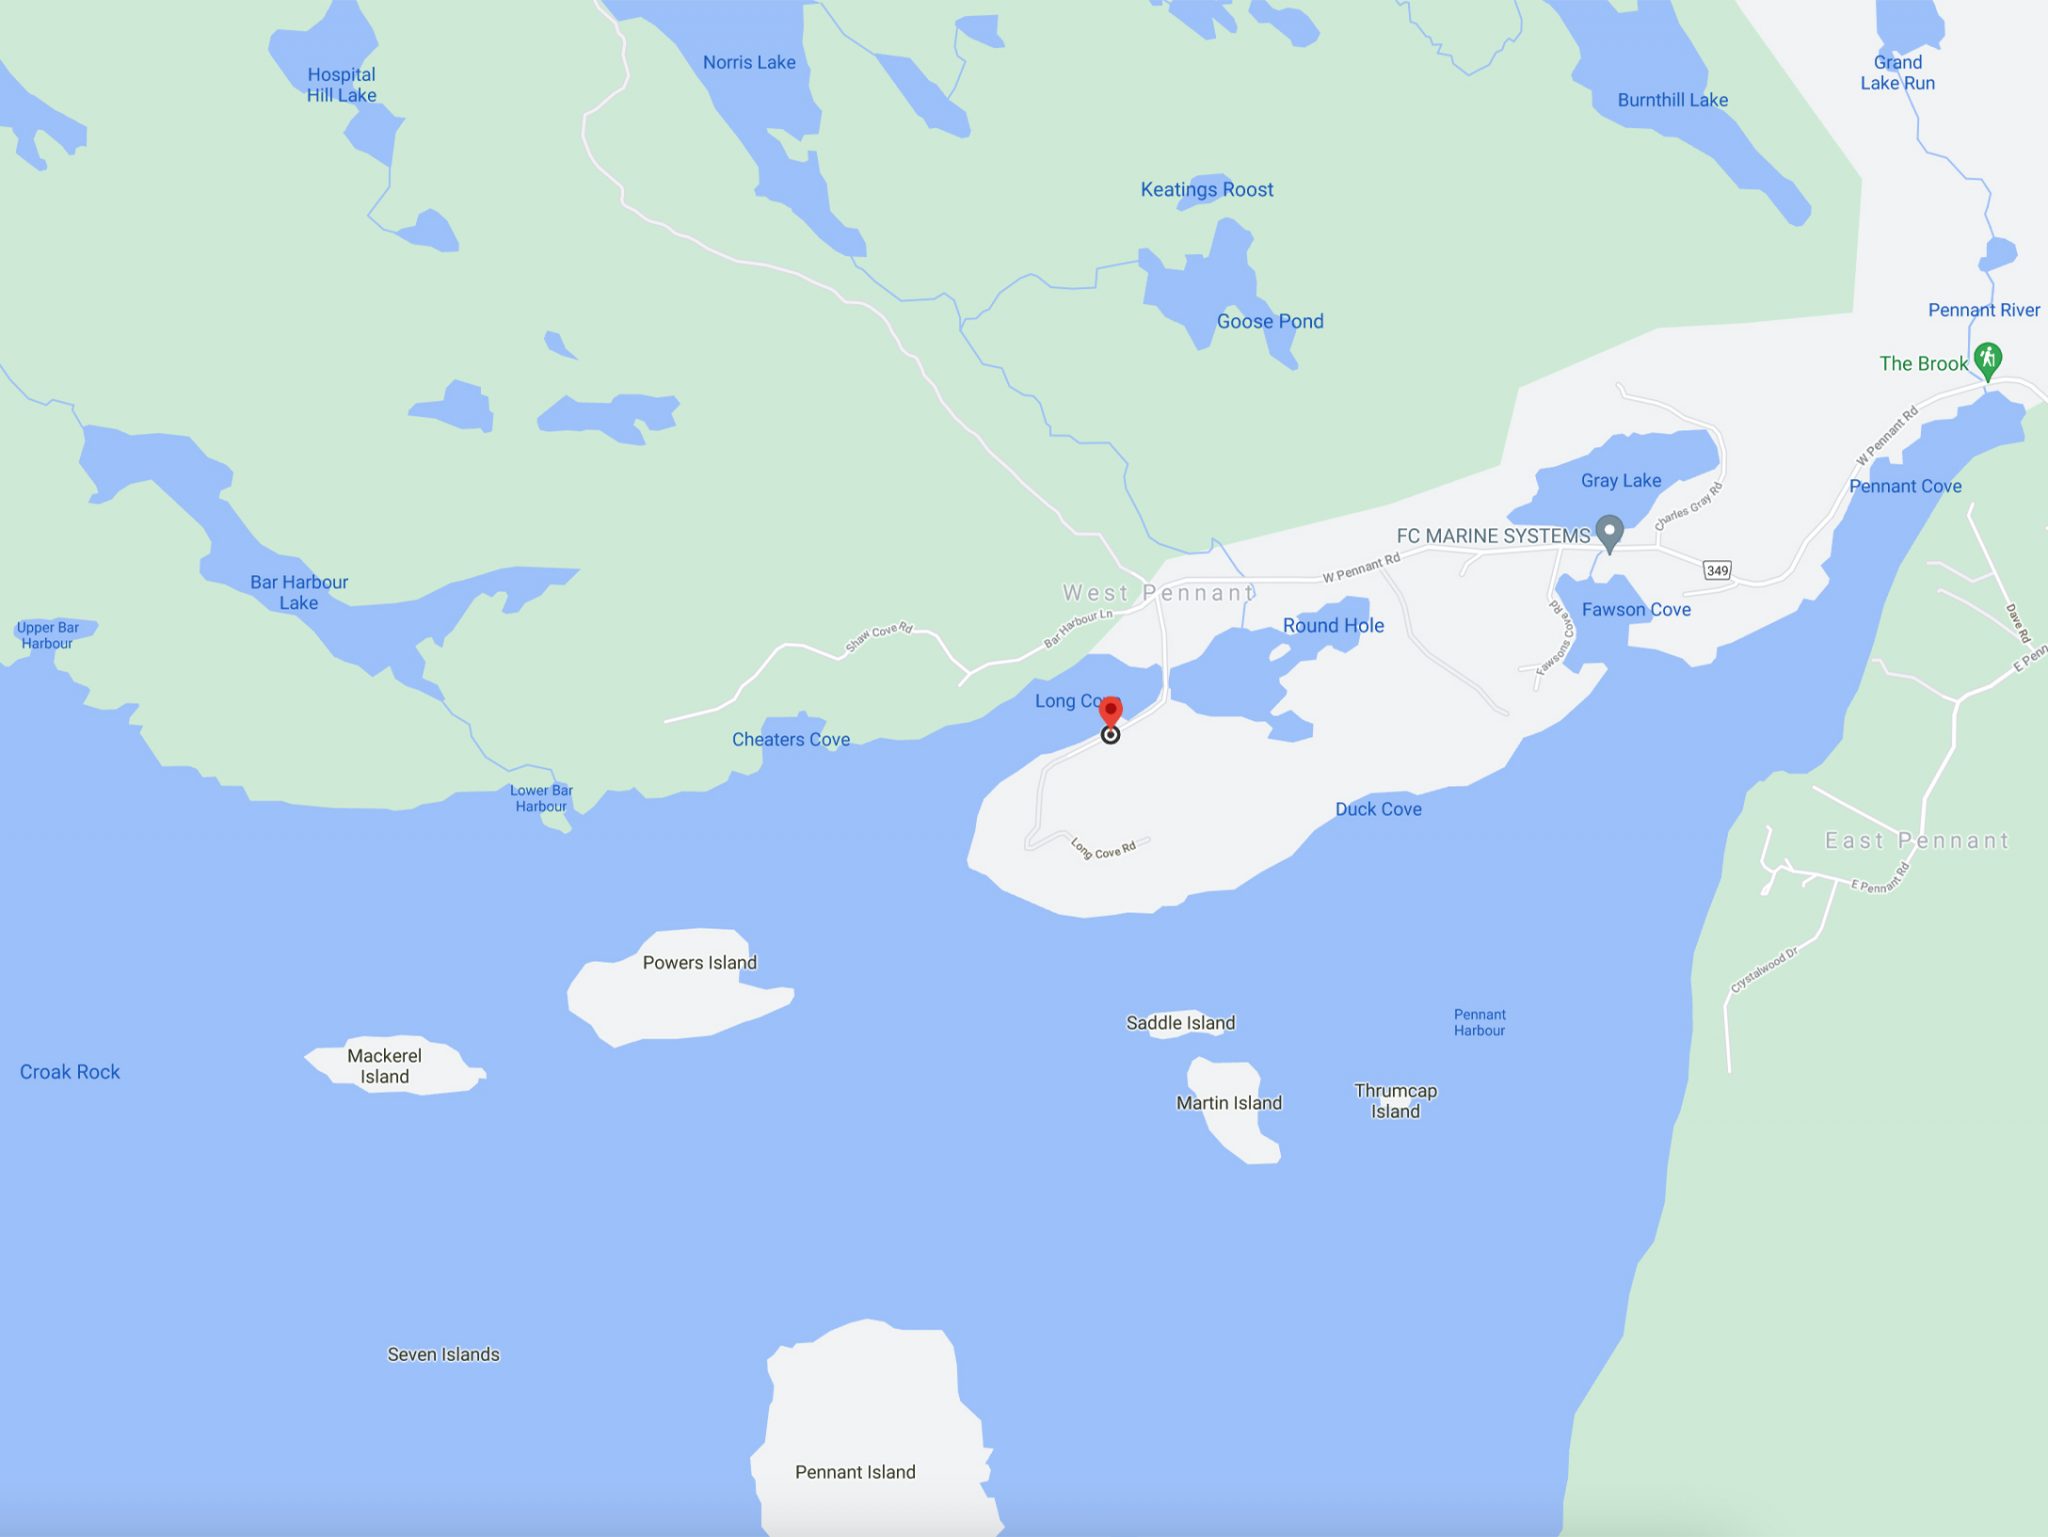 Long Cove Scuba Diving Site In Terrence Bay Halifax Region, Nova Scotia, Canada